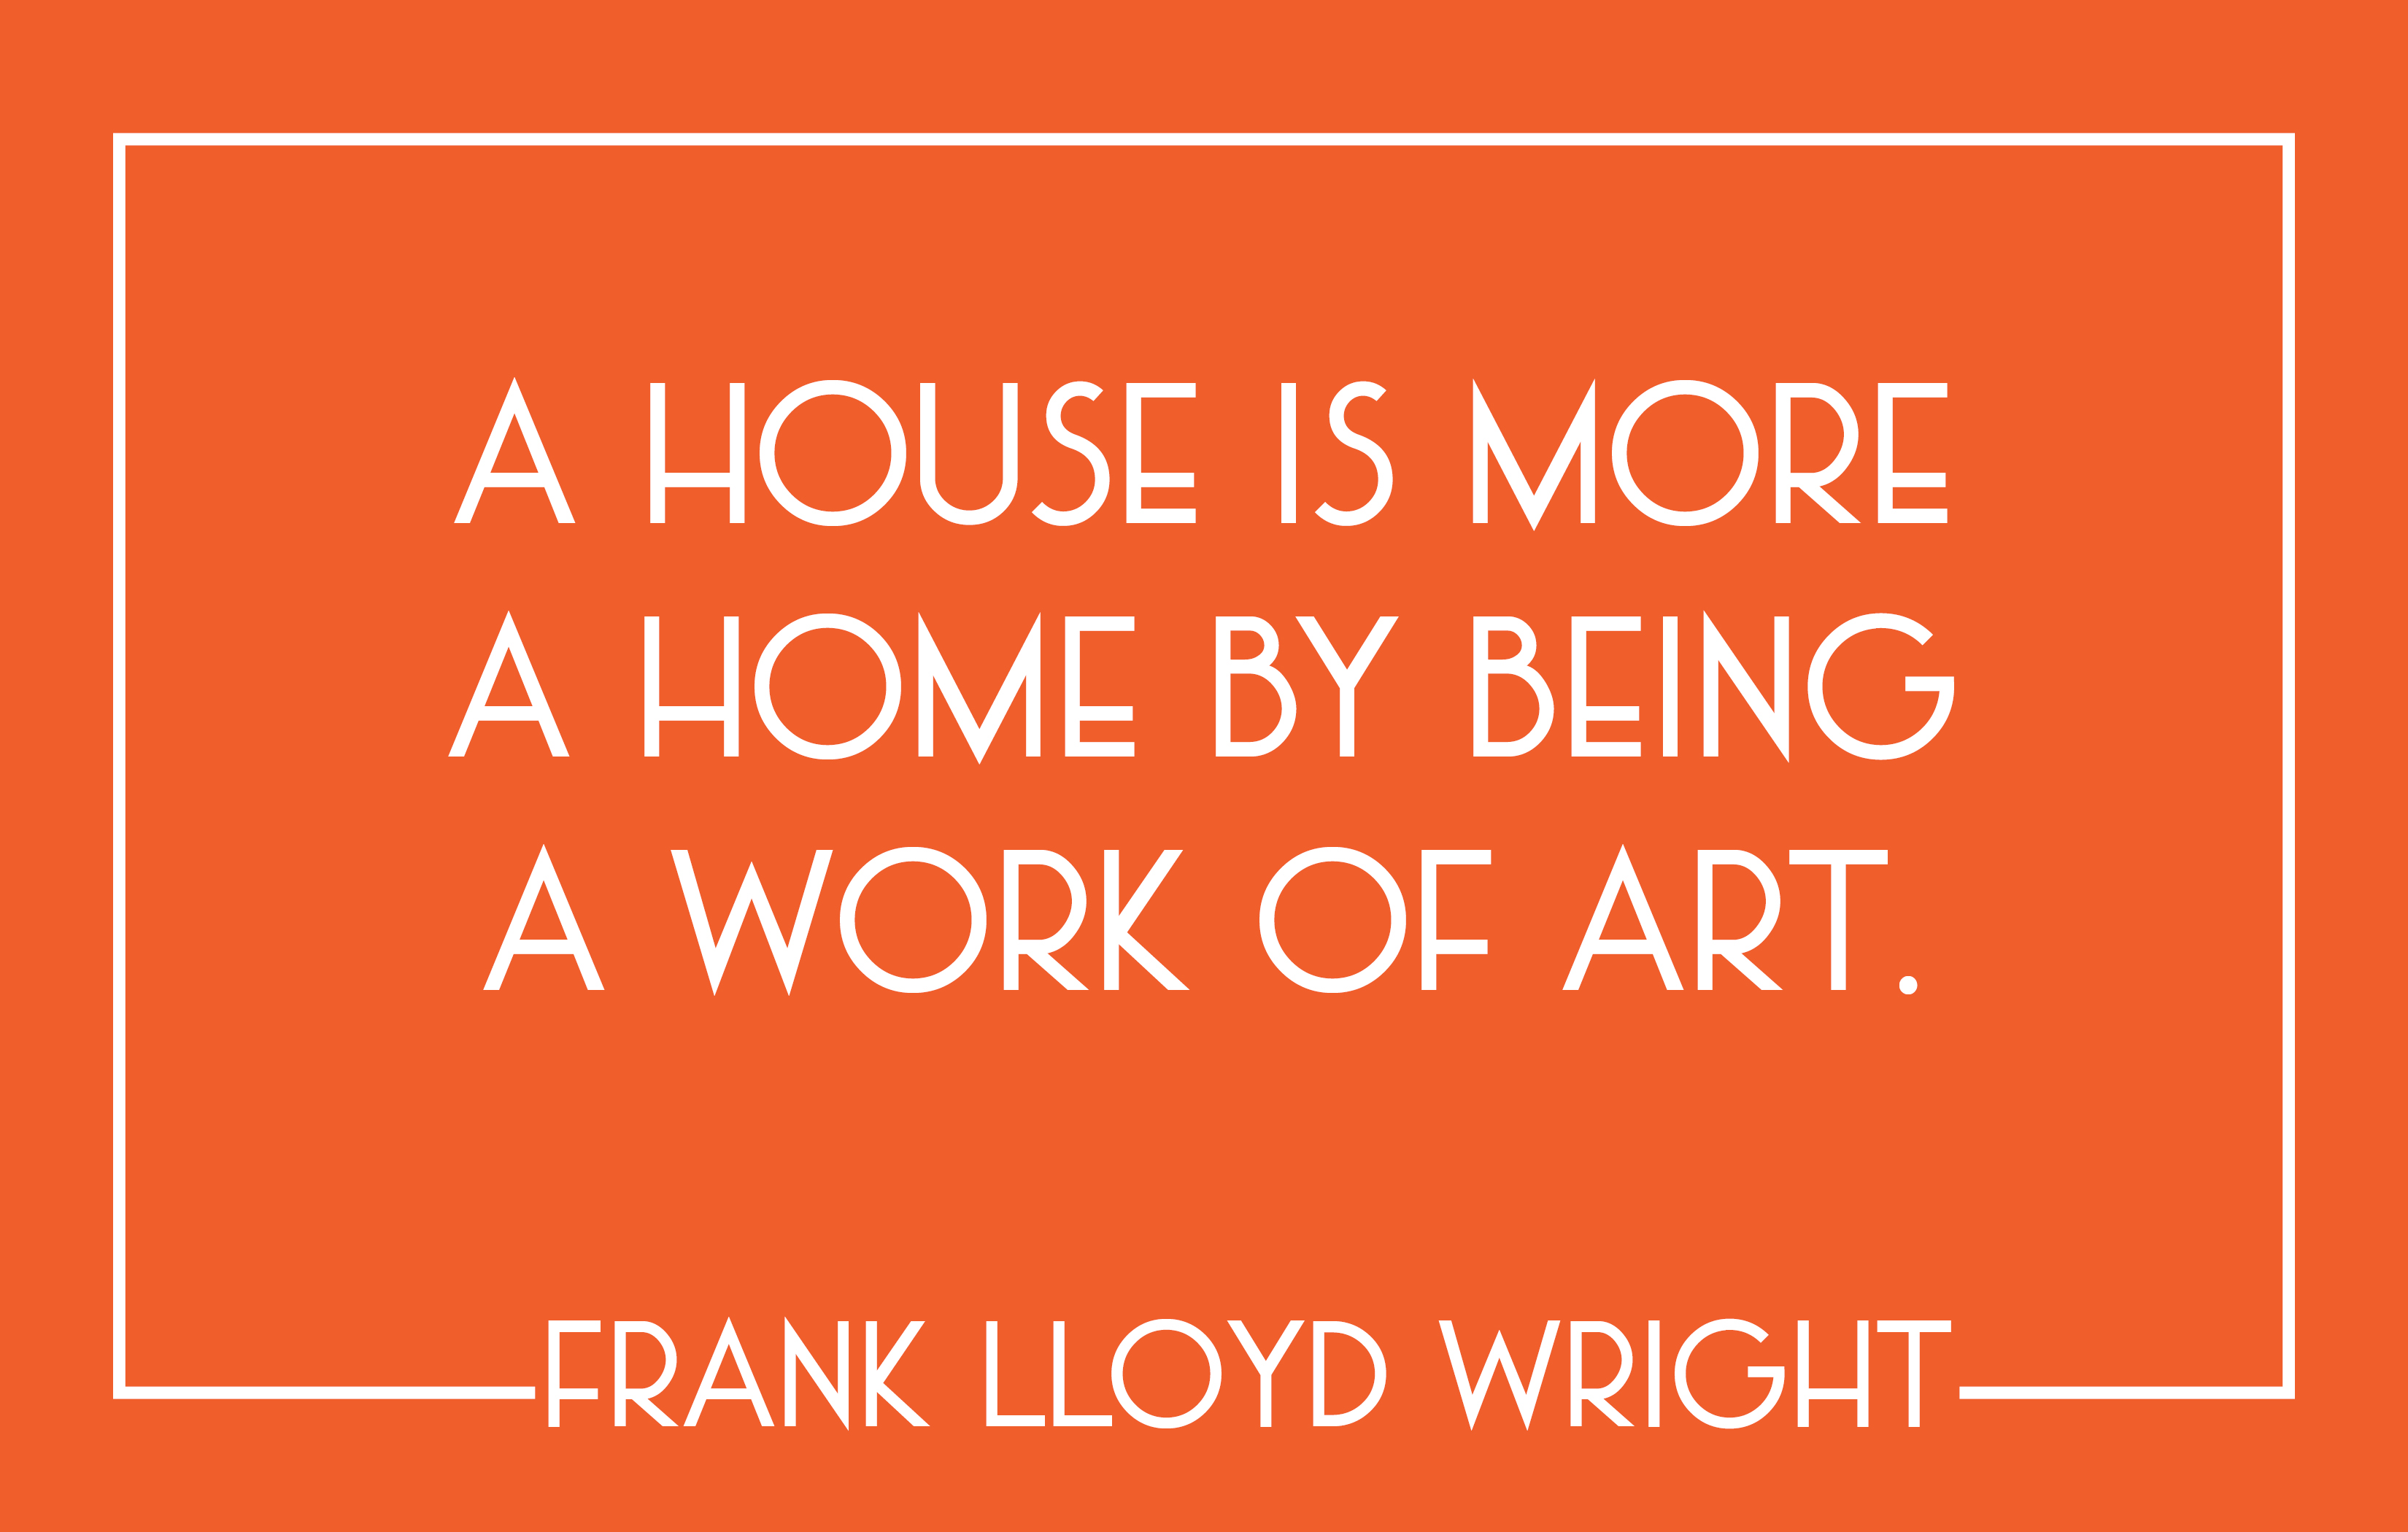 Frank Lloyd Wright quote 